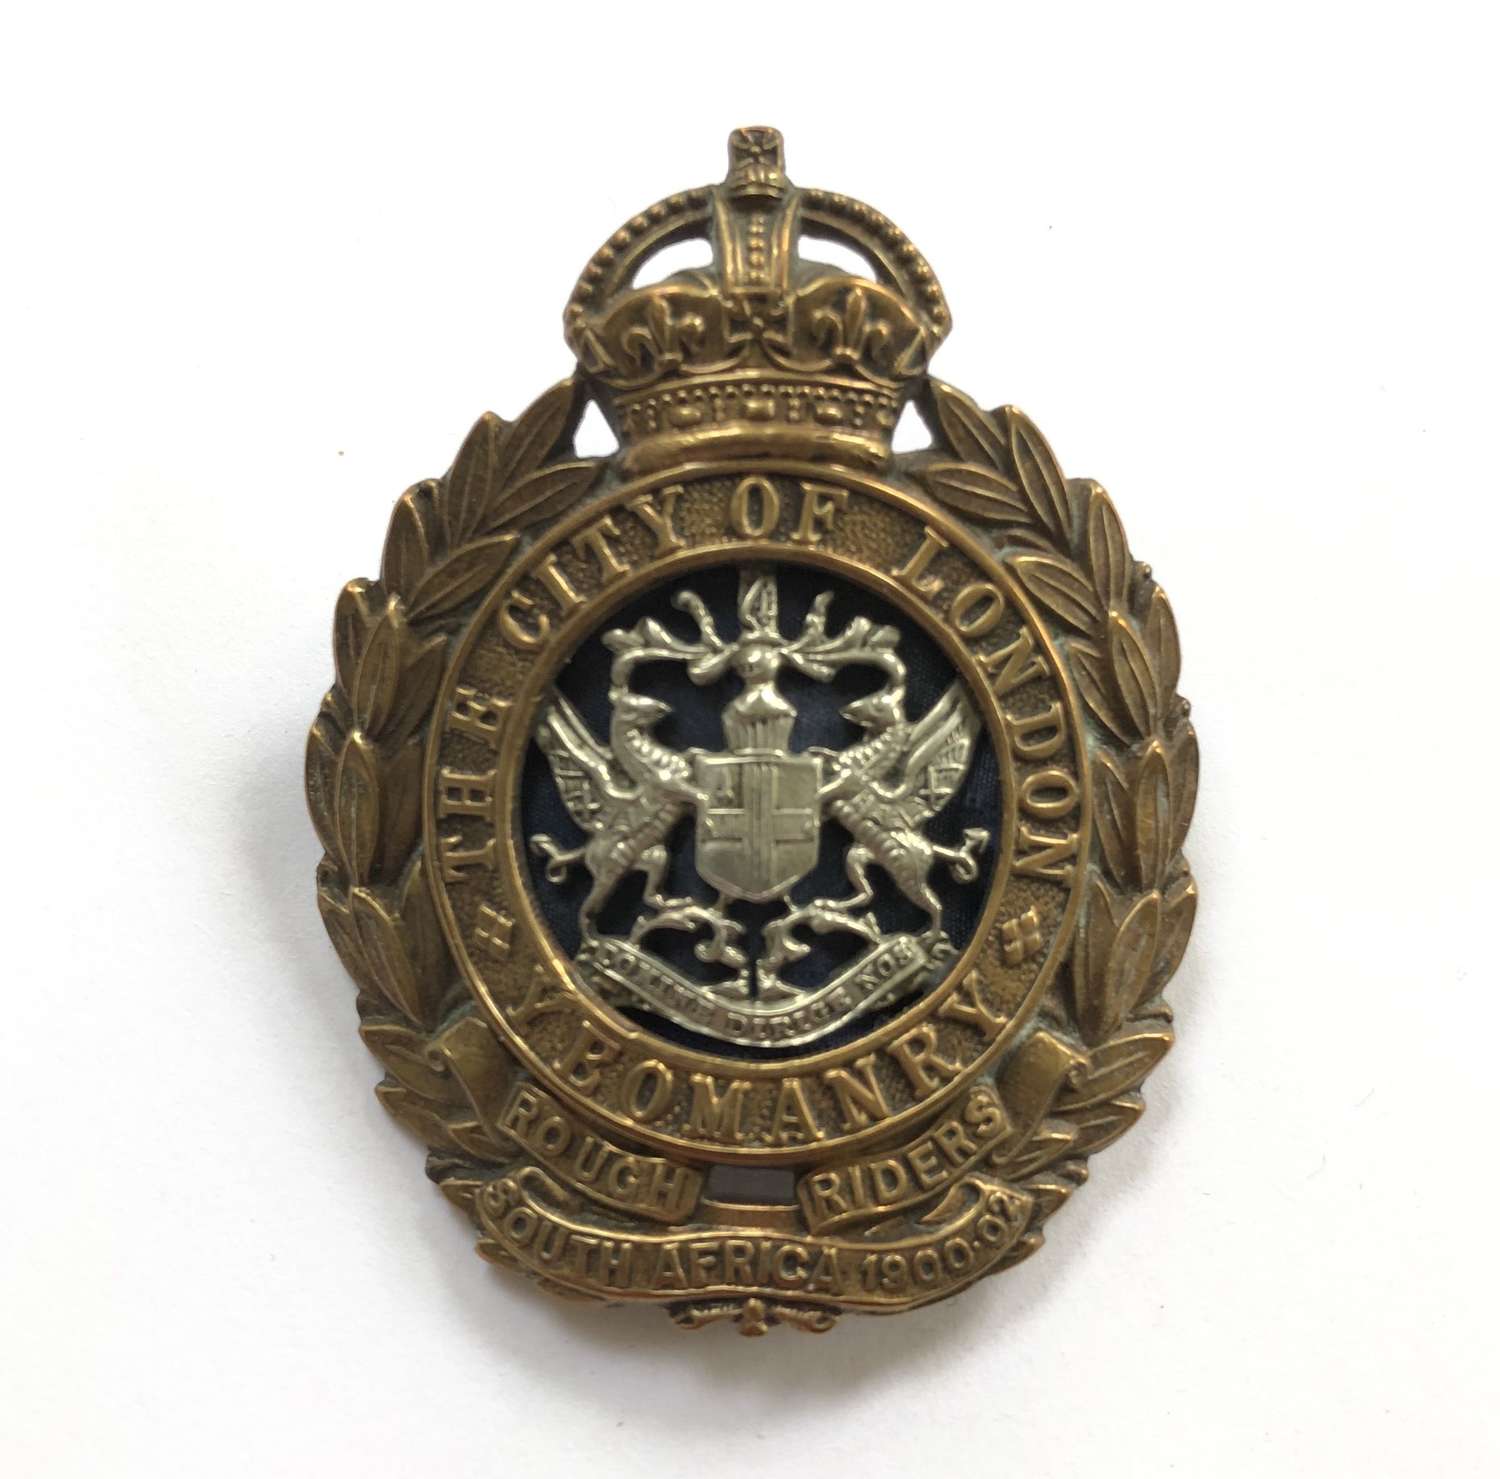 Rough Riders City of London Yeomanry cap badge c1908-50